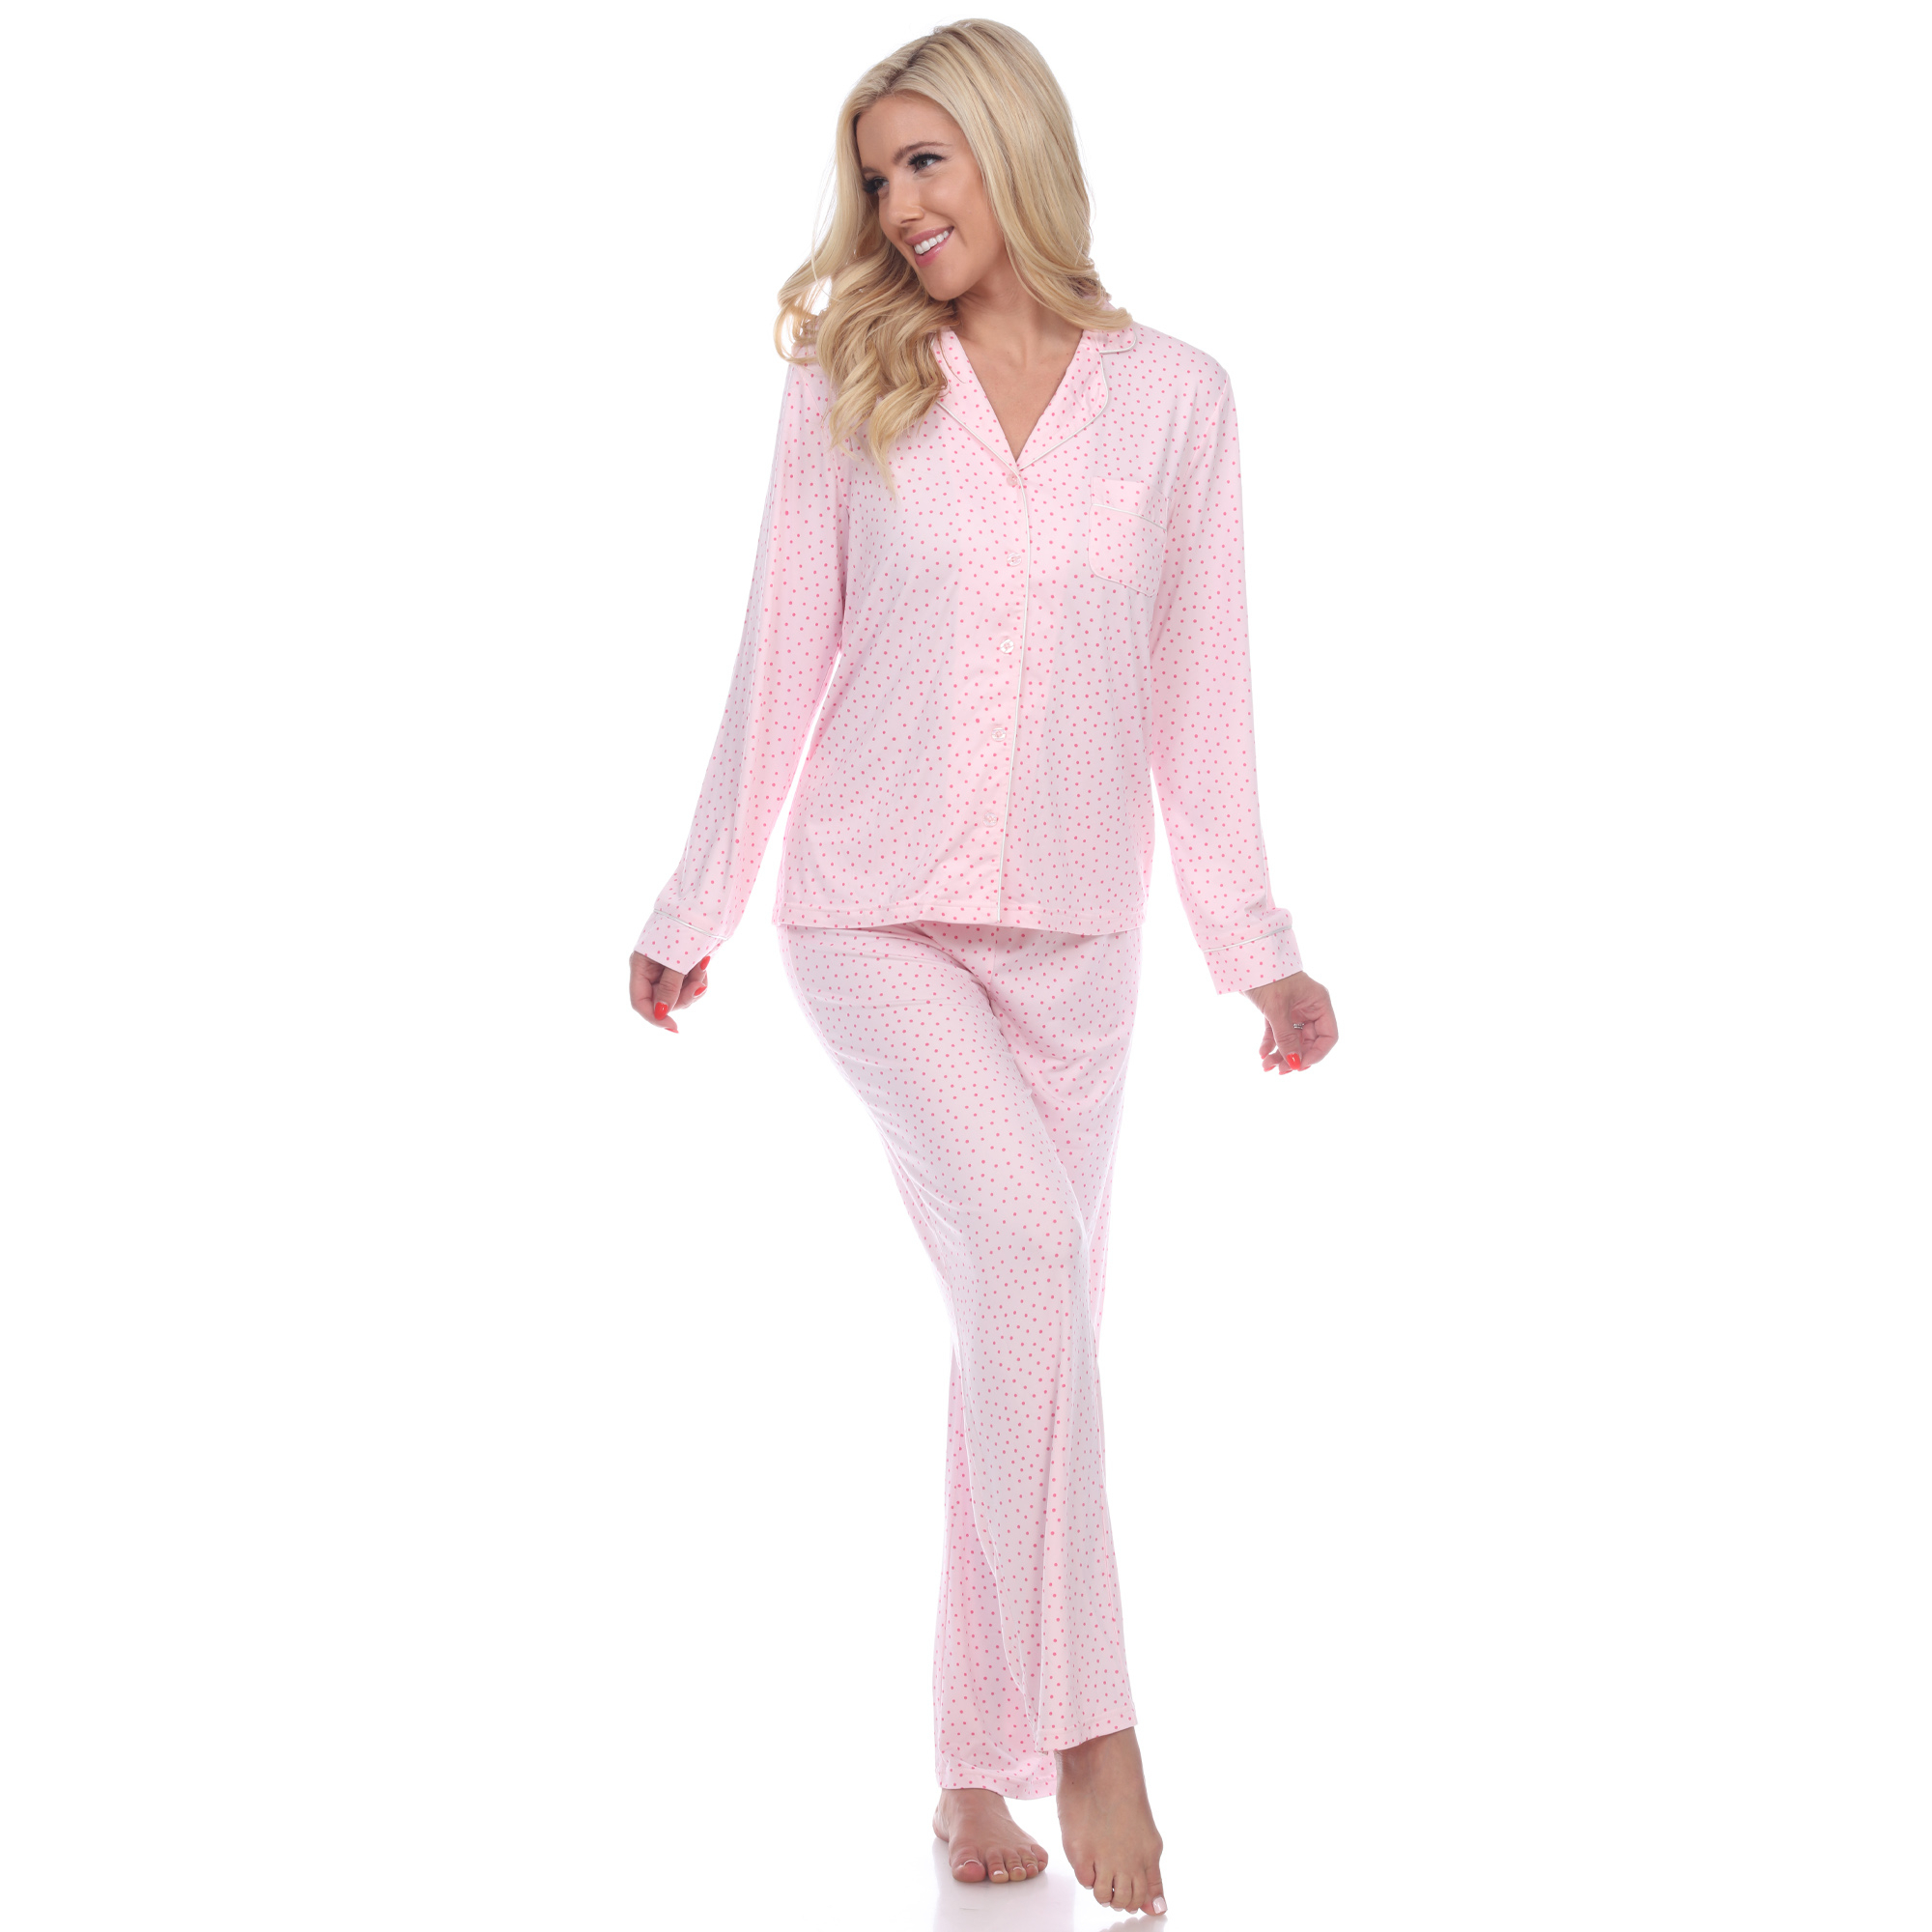 White Mark Women's Long Sleeve Dots Pajama Set - Pink, 2X